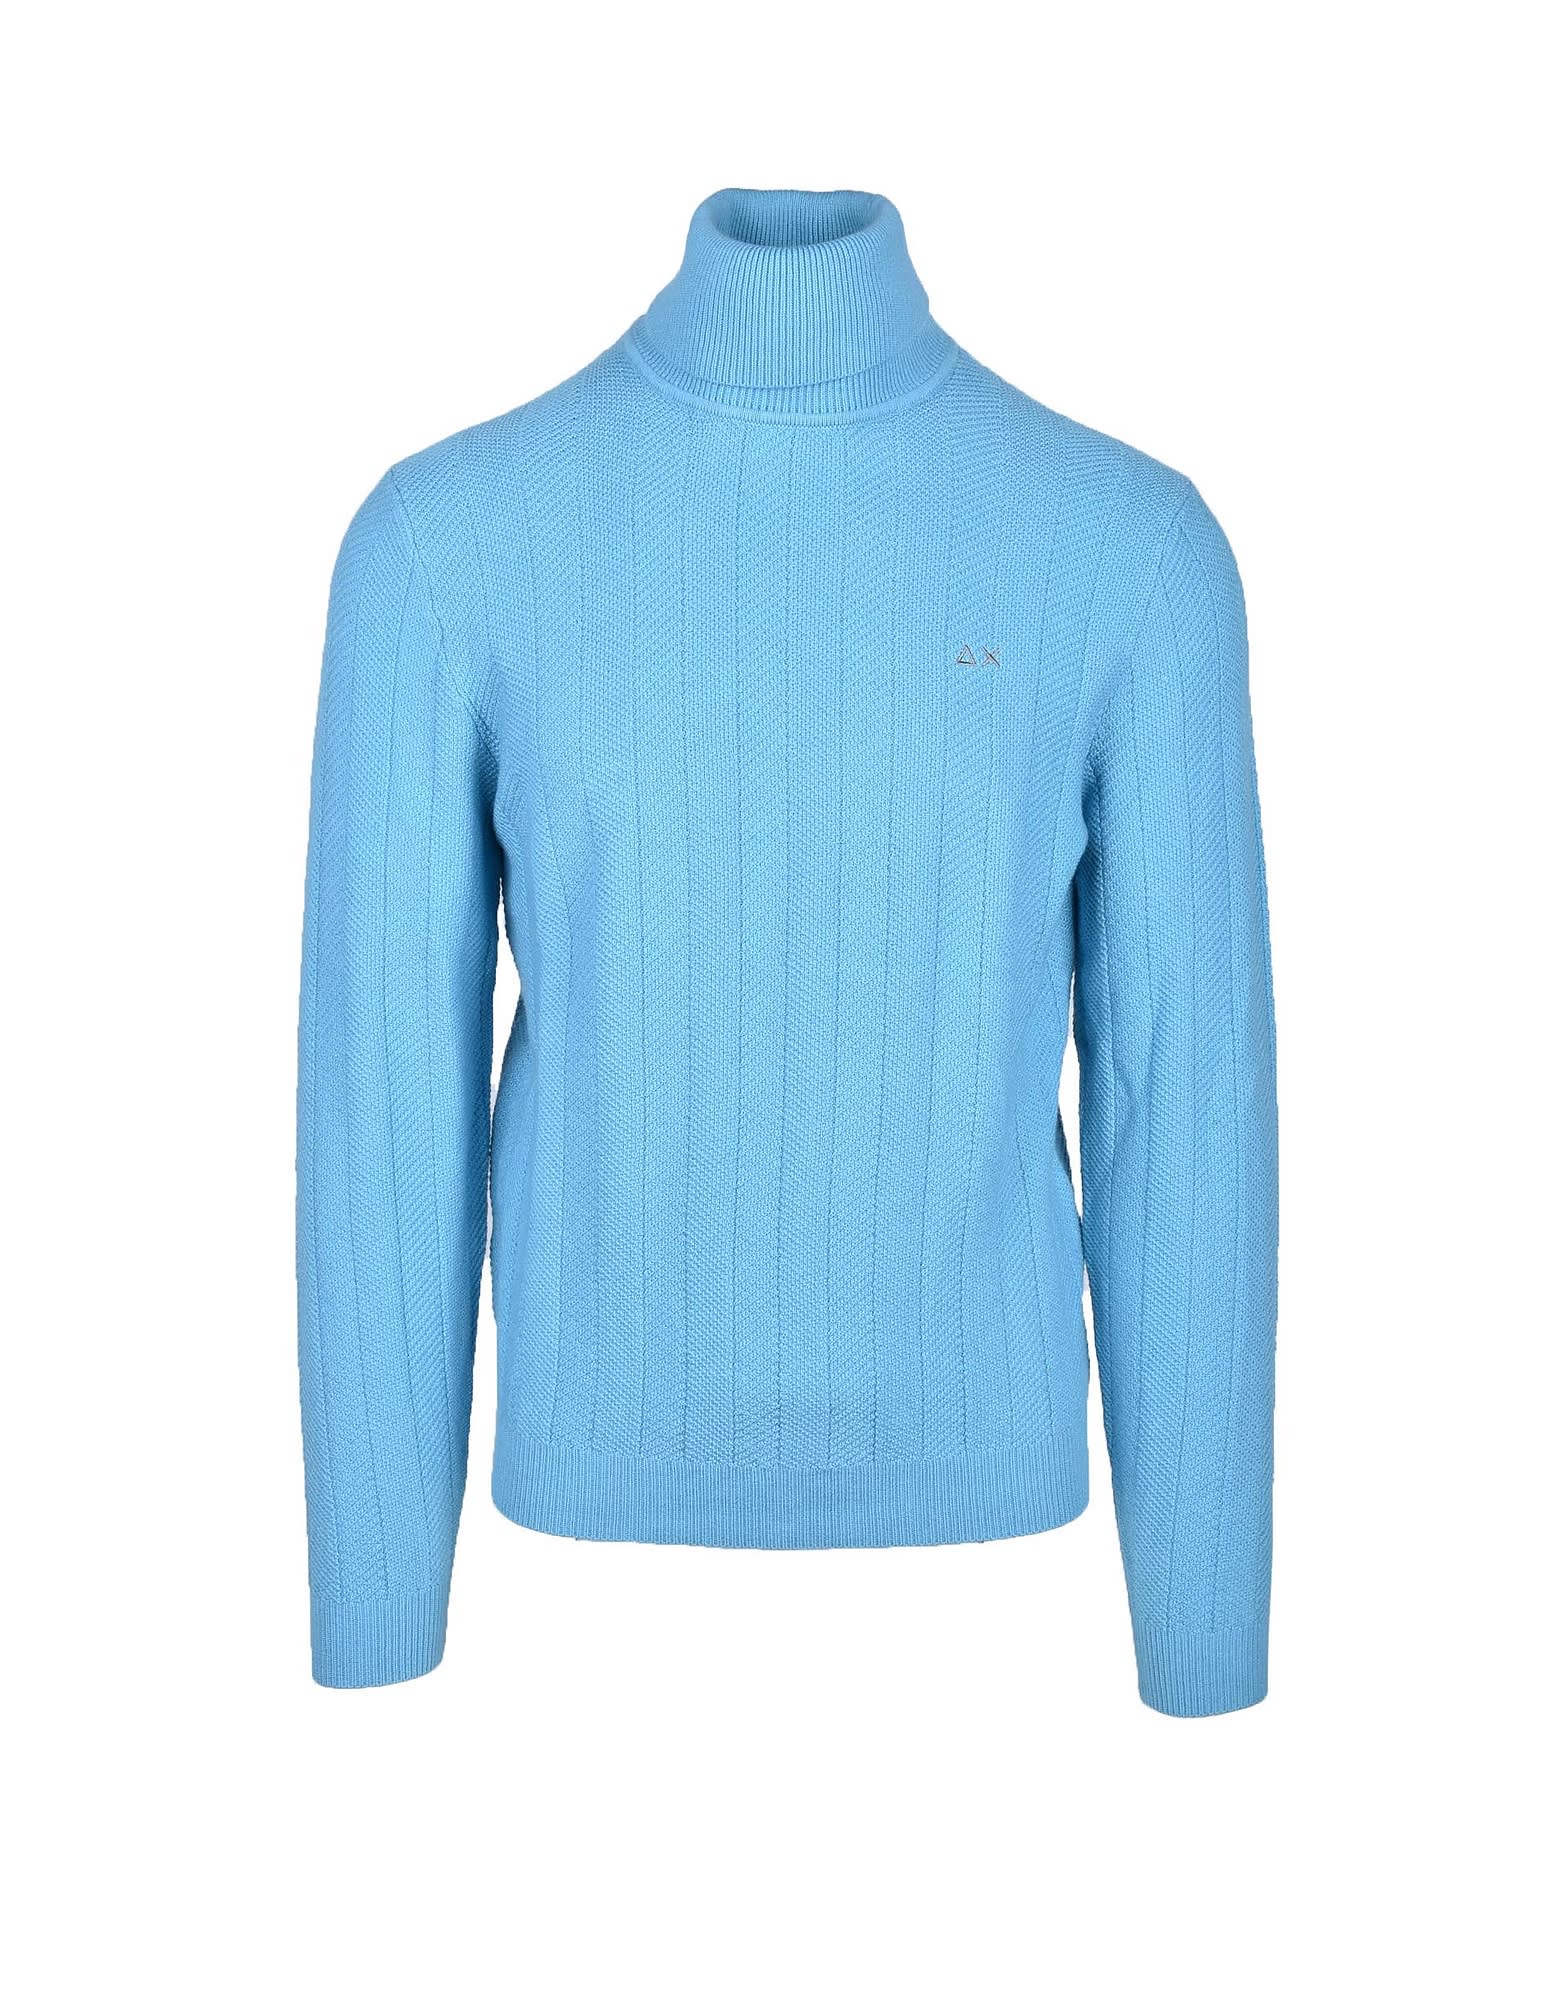 Mens Light Blue Sweater